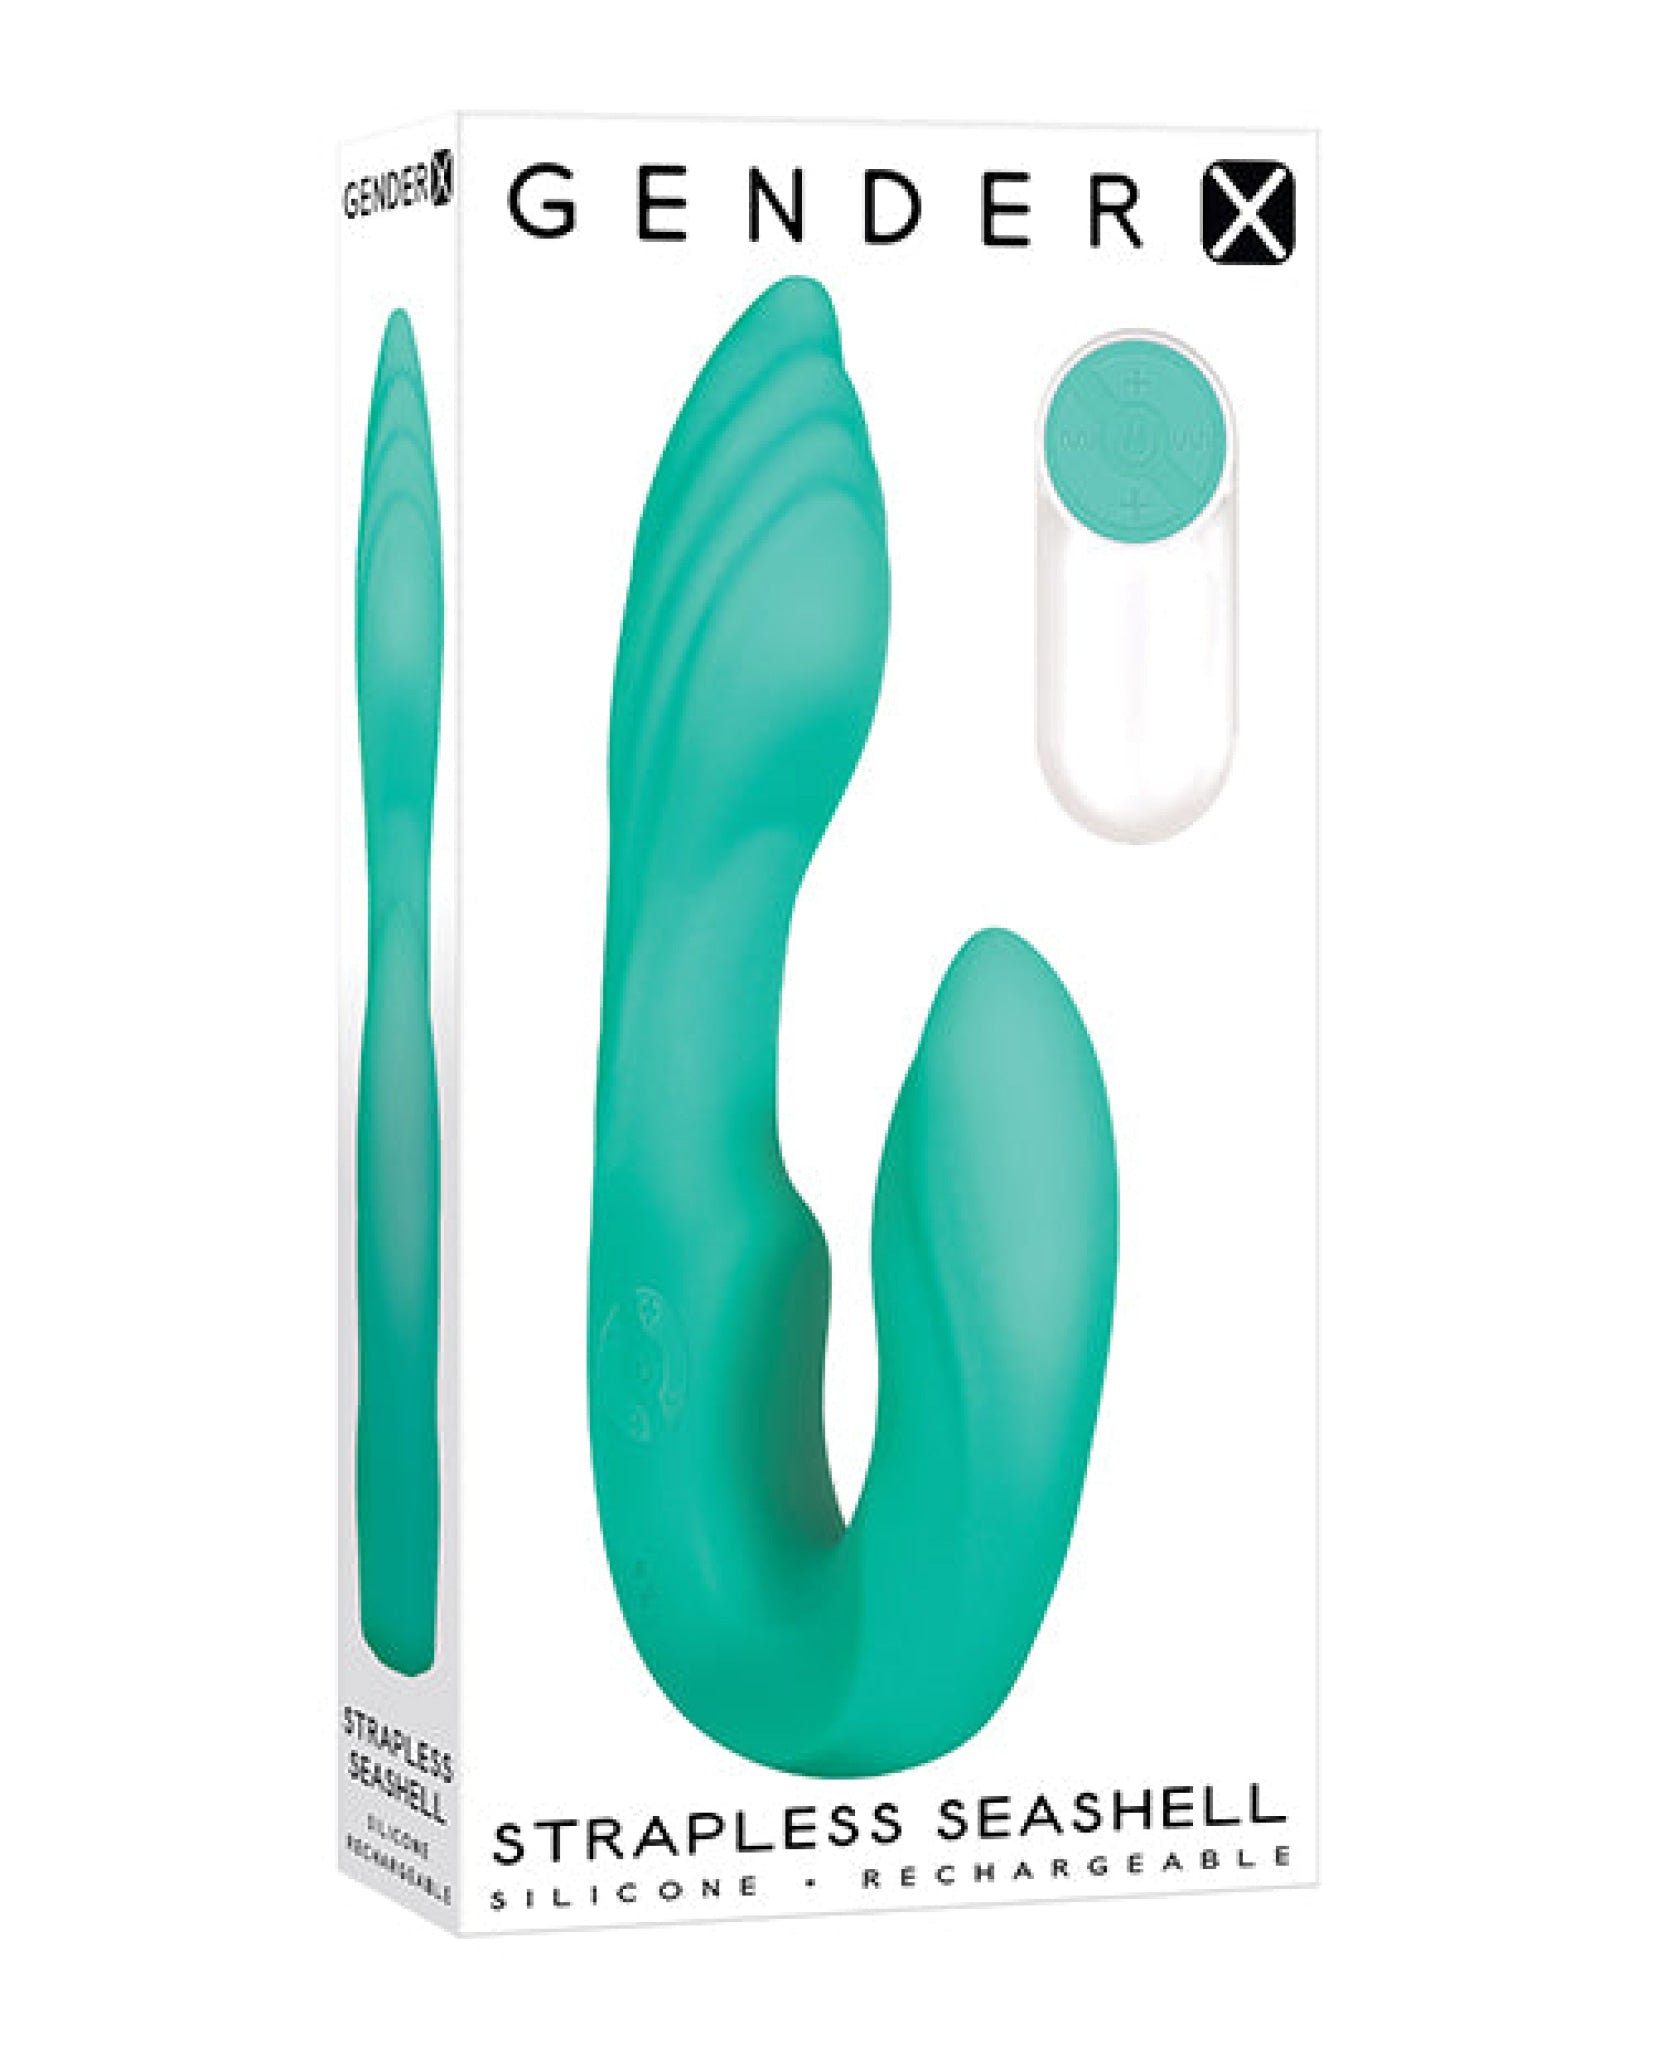 Gender X Strapless Seashell - Teal Gender X